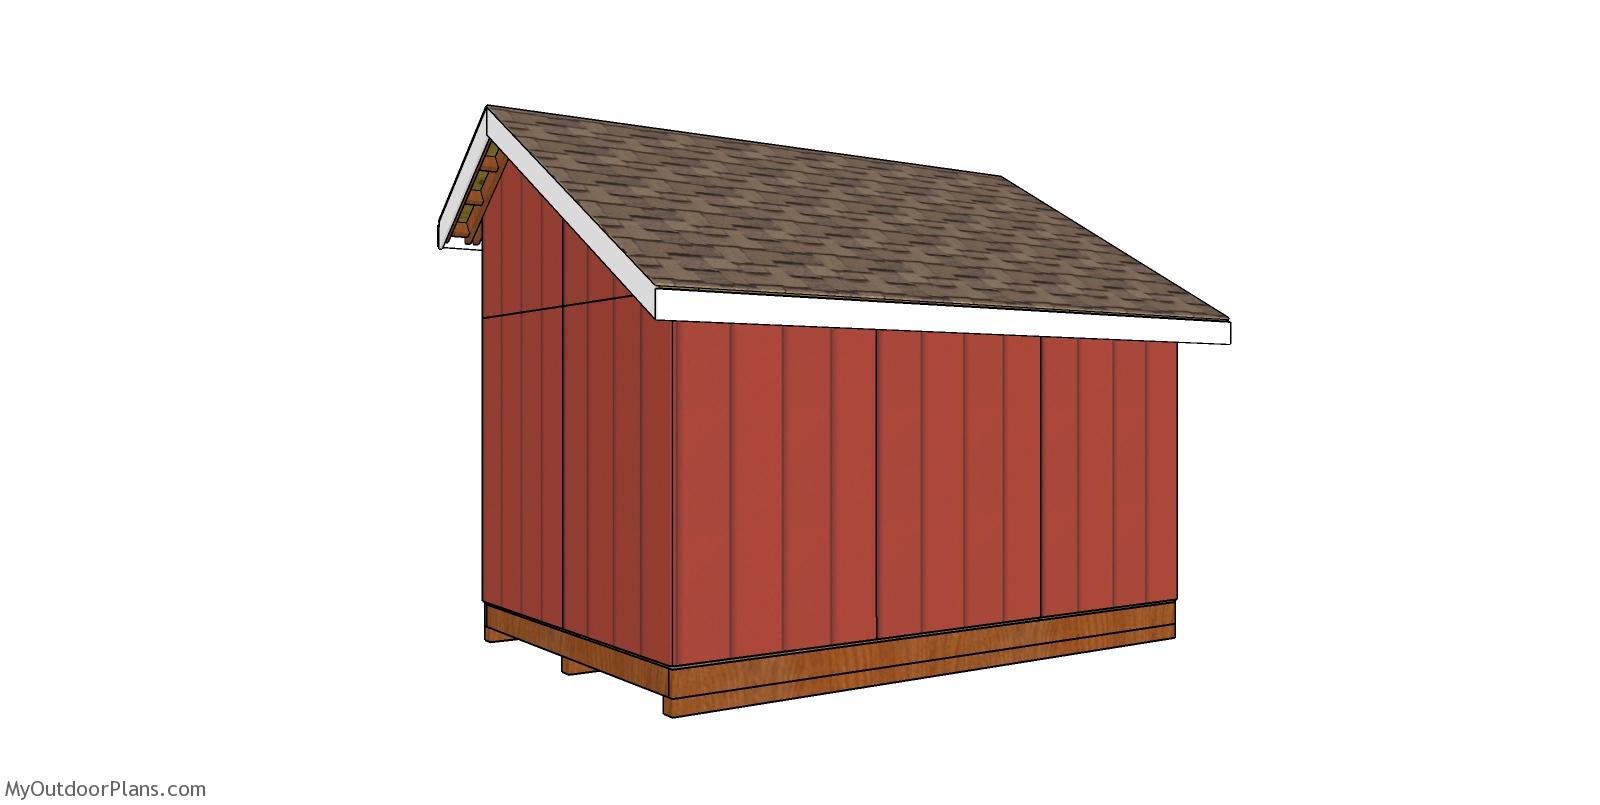 8×12 saltbox shed plans – back view | MyOutdoorPlans